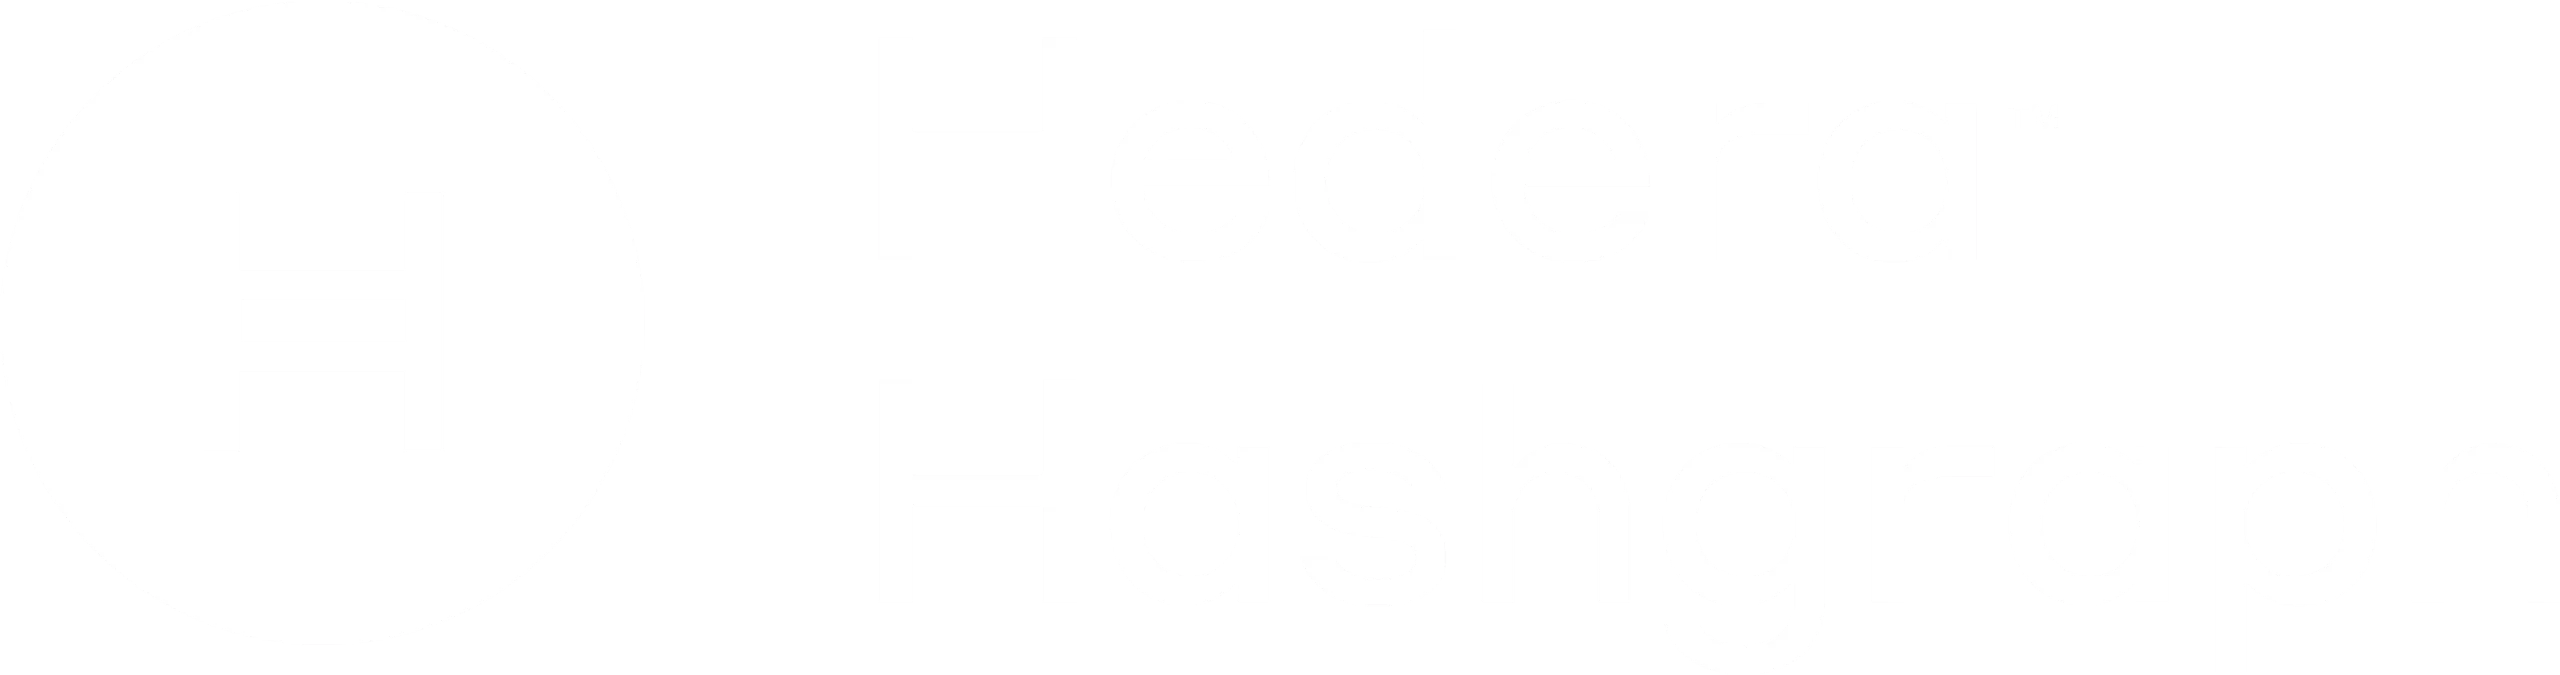 65e744454d9779c17e752f32_hedera-hashgraph-logo